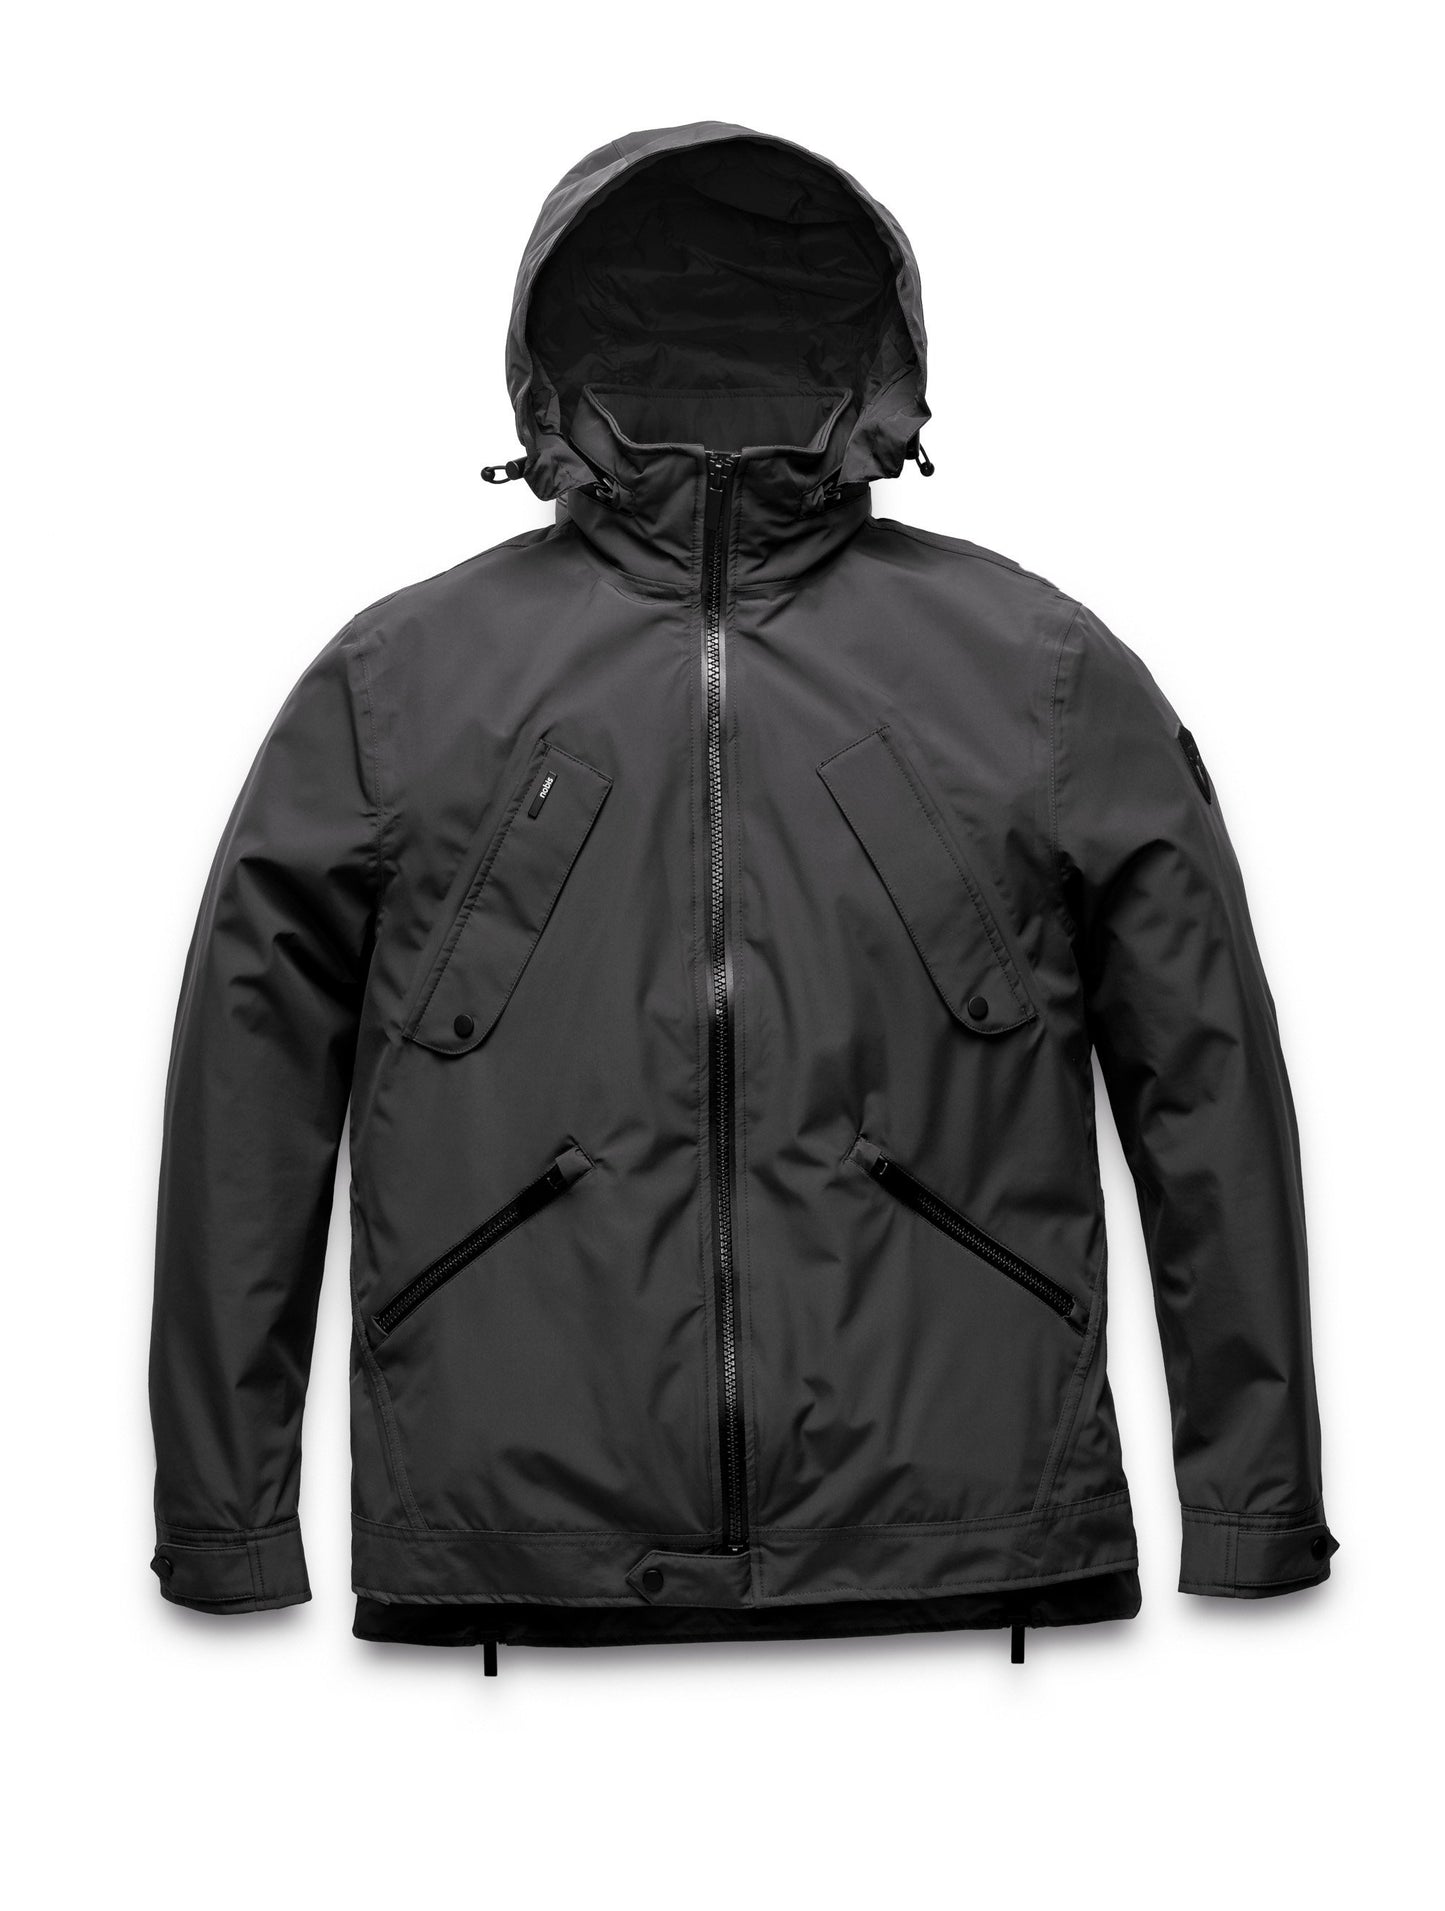 Men's waist length waterproof jacket with exposed zipper in Black